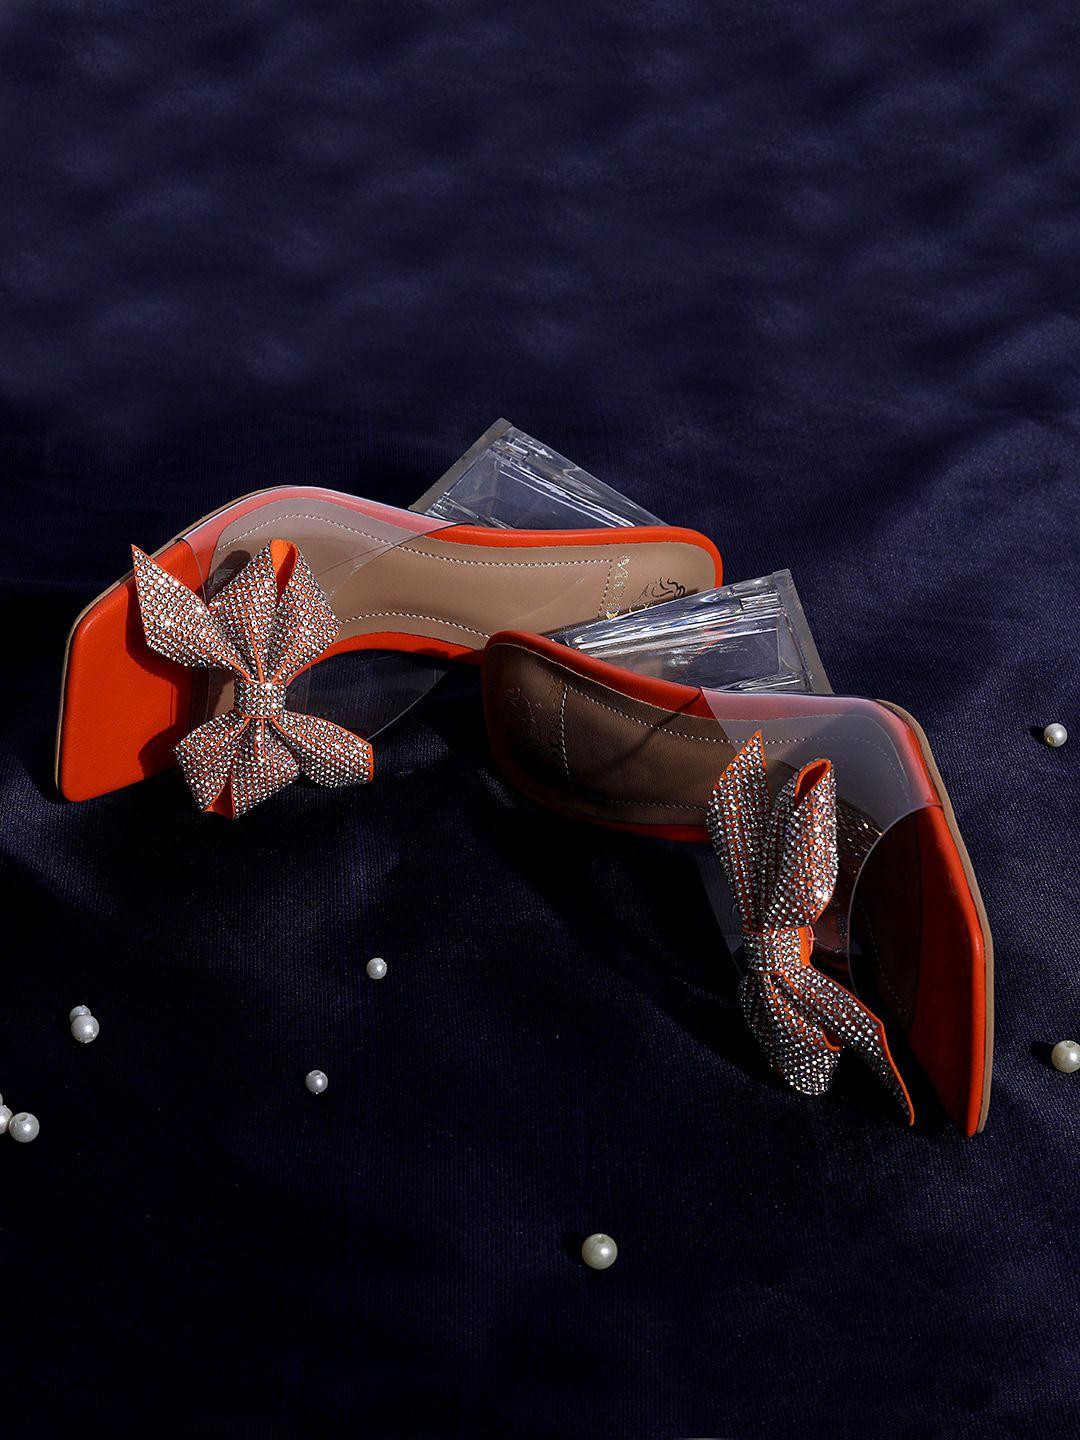 moda-x embellished block heels